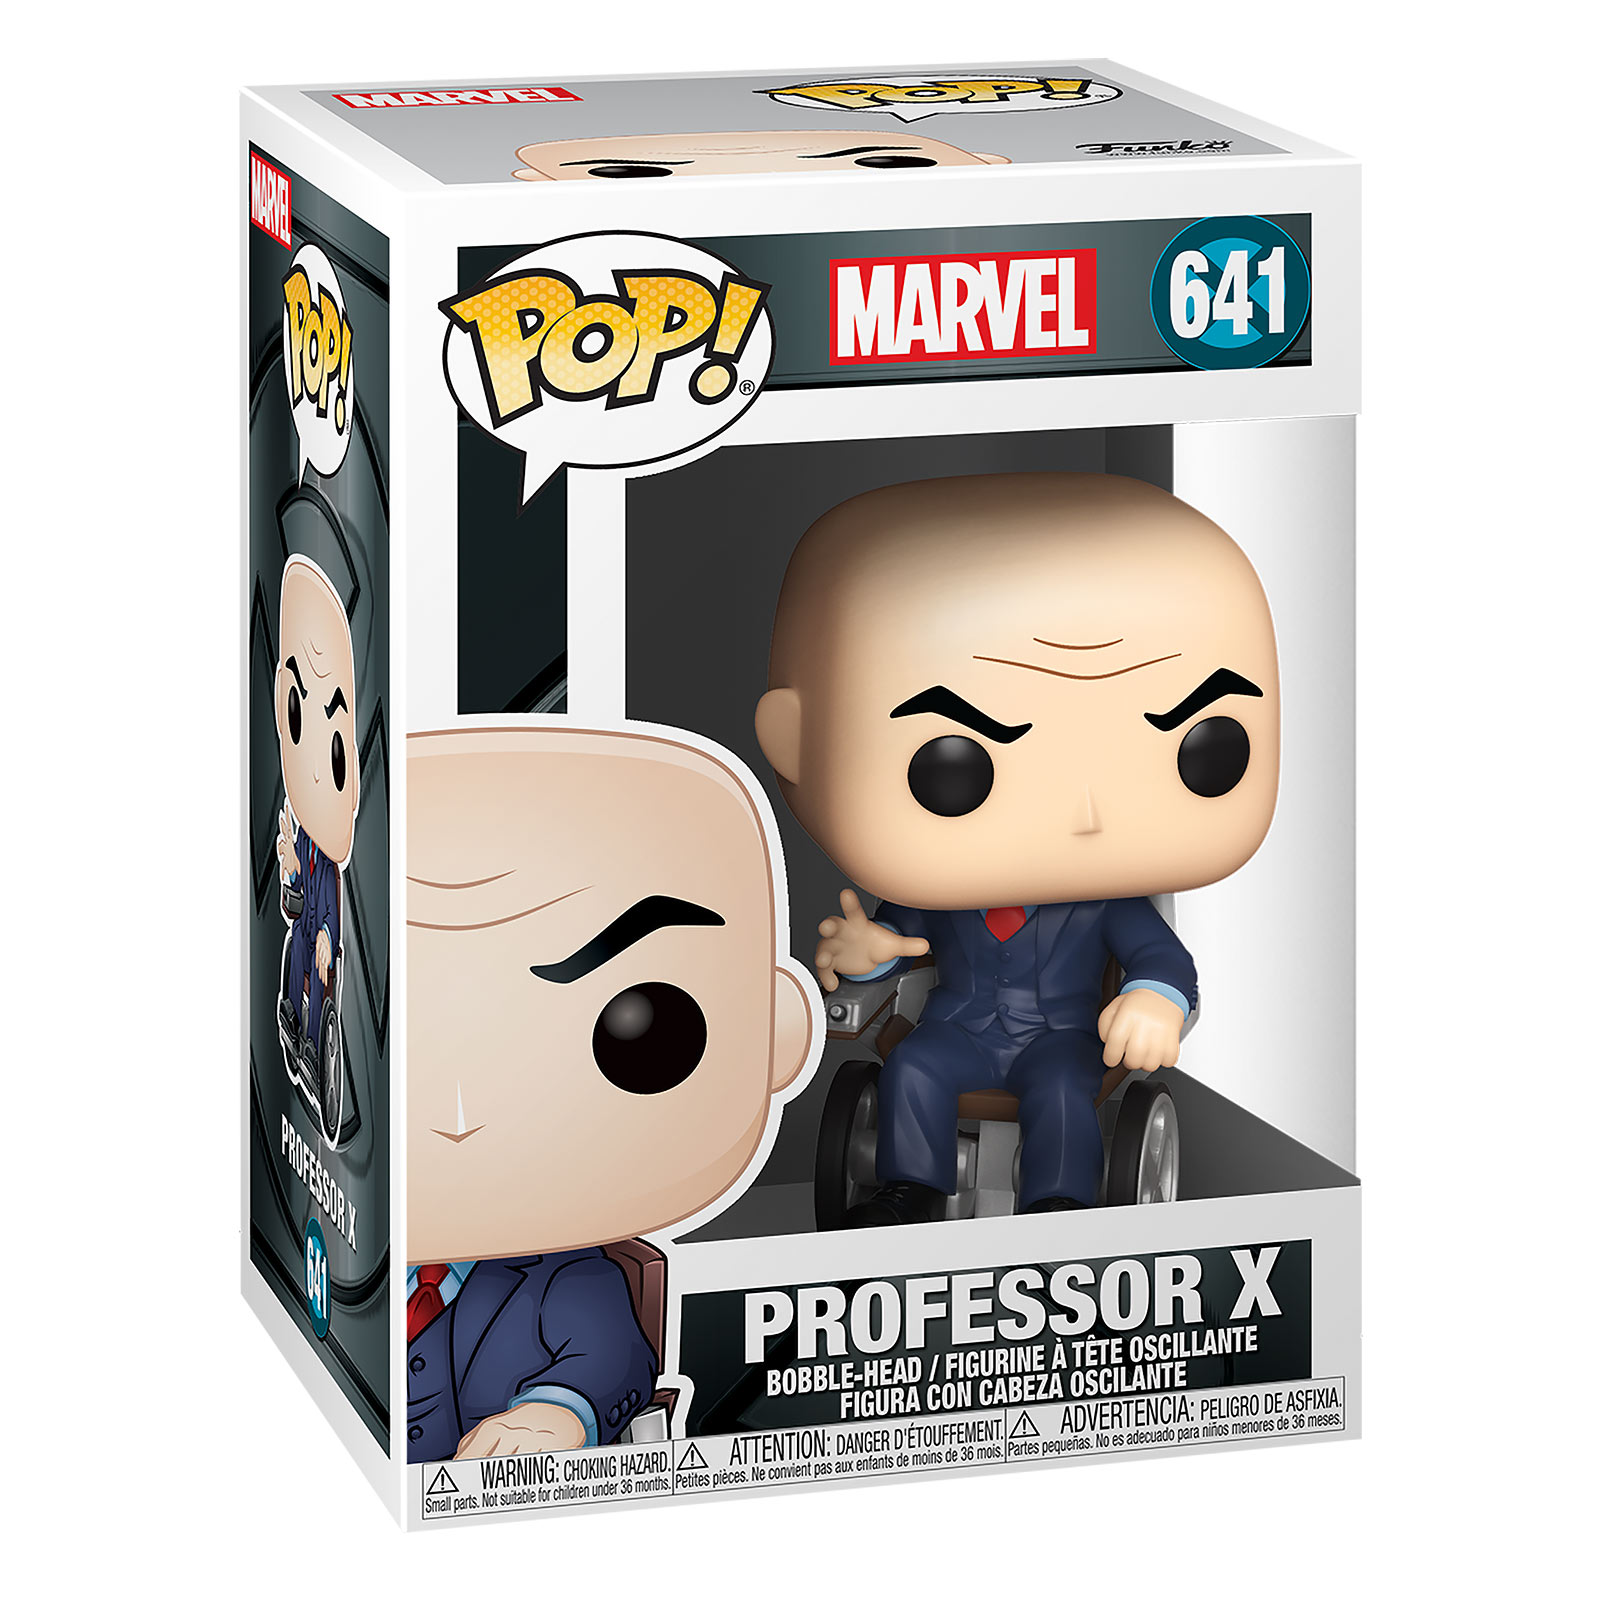 X-Men - Professor X Funko Pop bobblehead figure